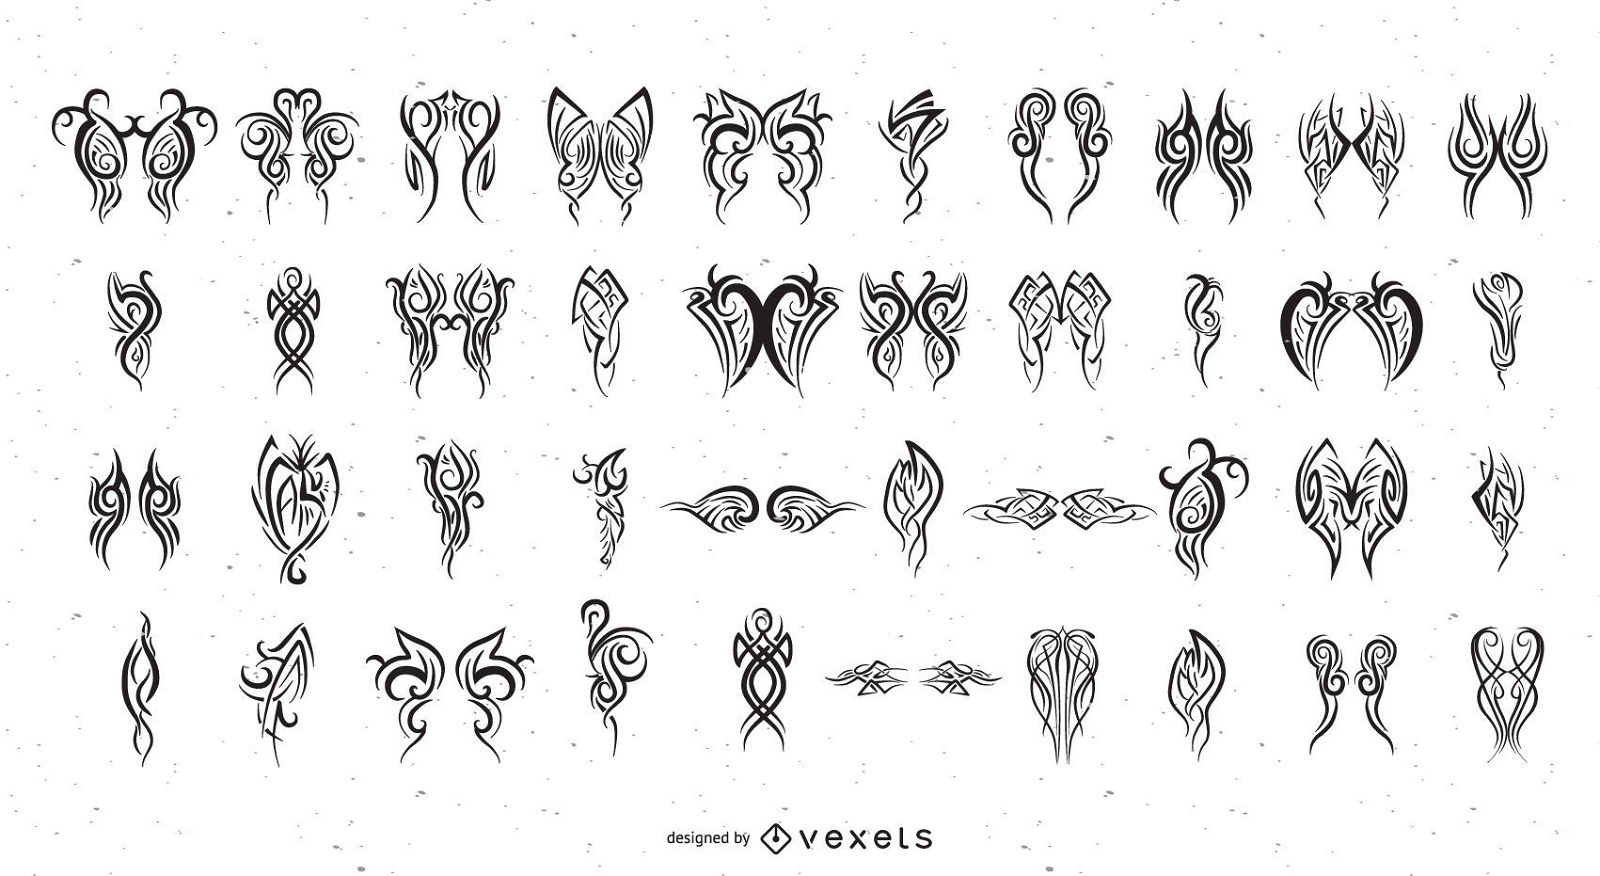 Details more than 90 vector tattoo designs best - esthdonghoadian